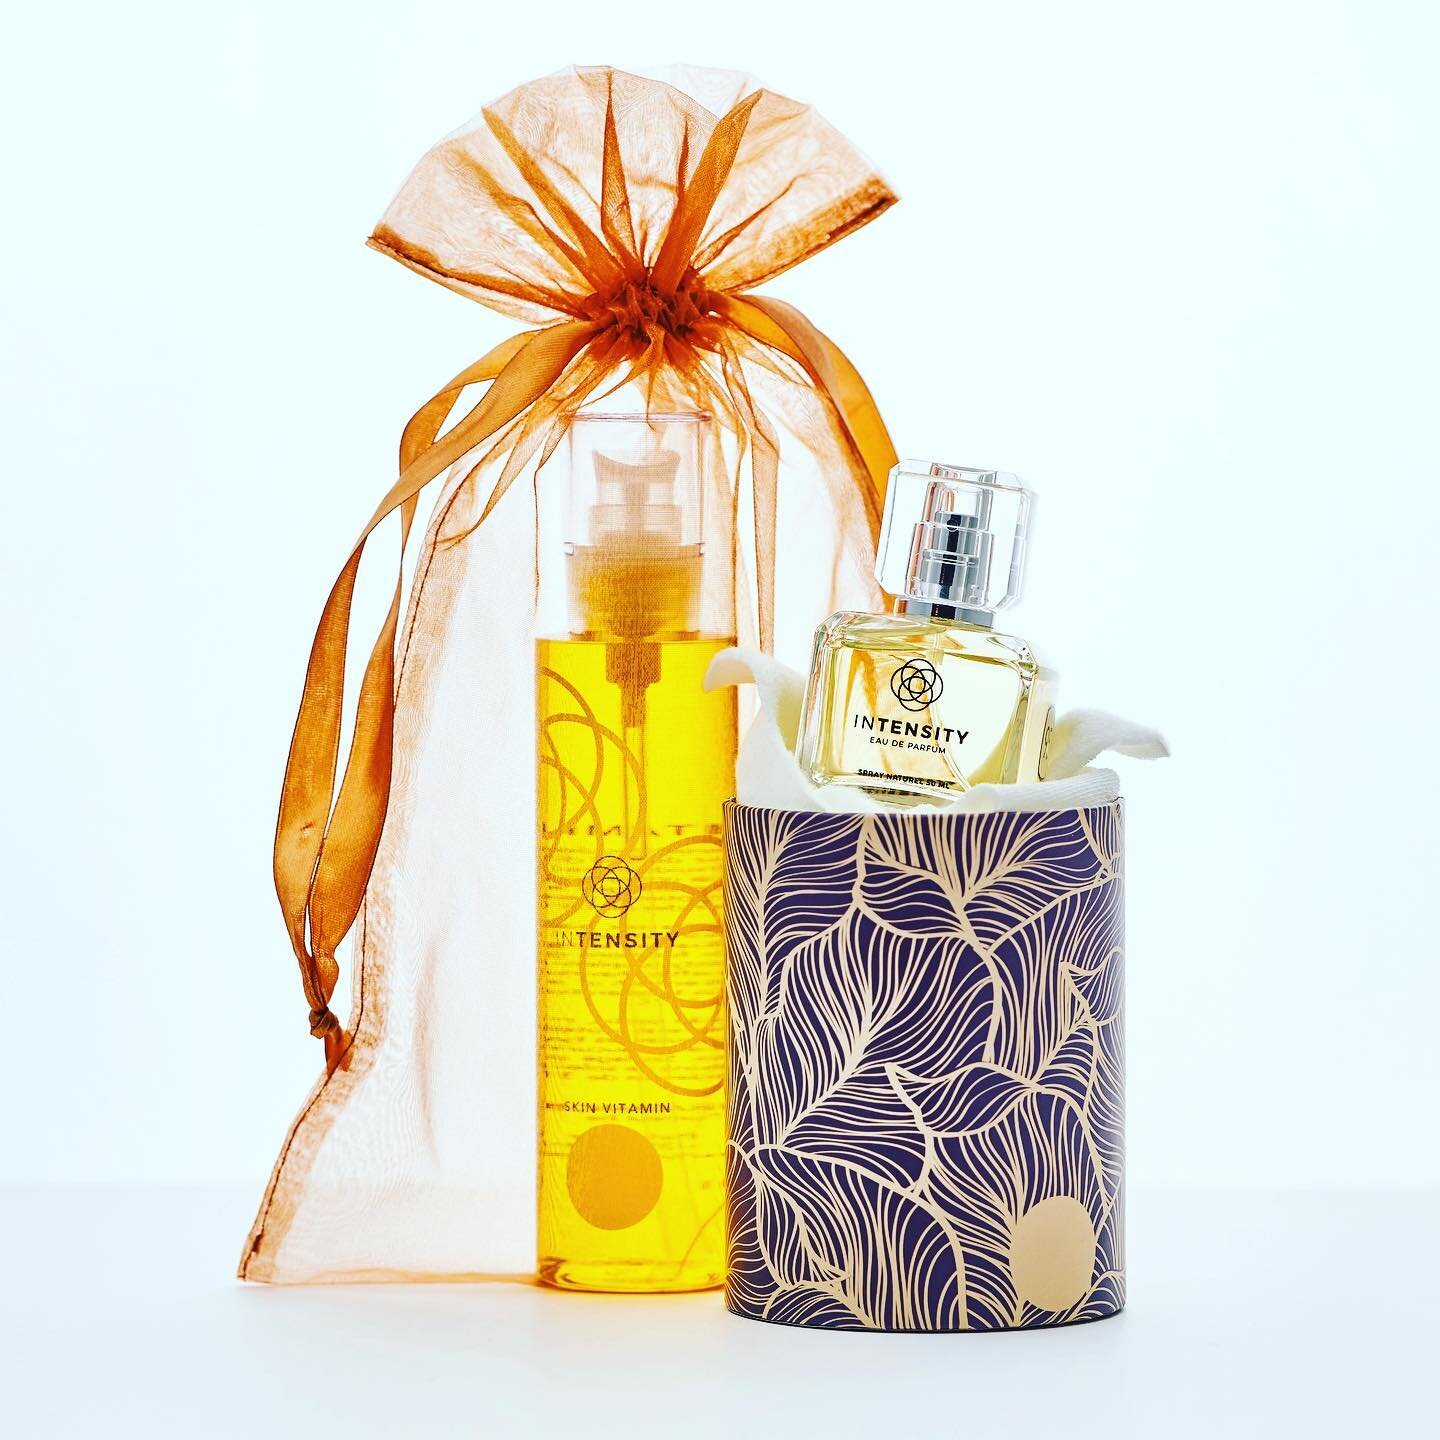 Intensity perfume &amp; matching jojoba 🧡

# Intensity #michamps #shoppeninantwerpen #antwerpen #parfumerie #bodycare #loveit #❤️